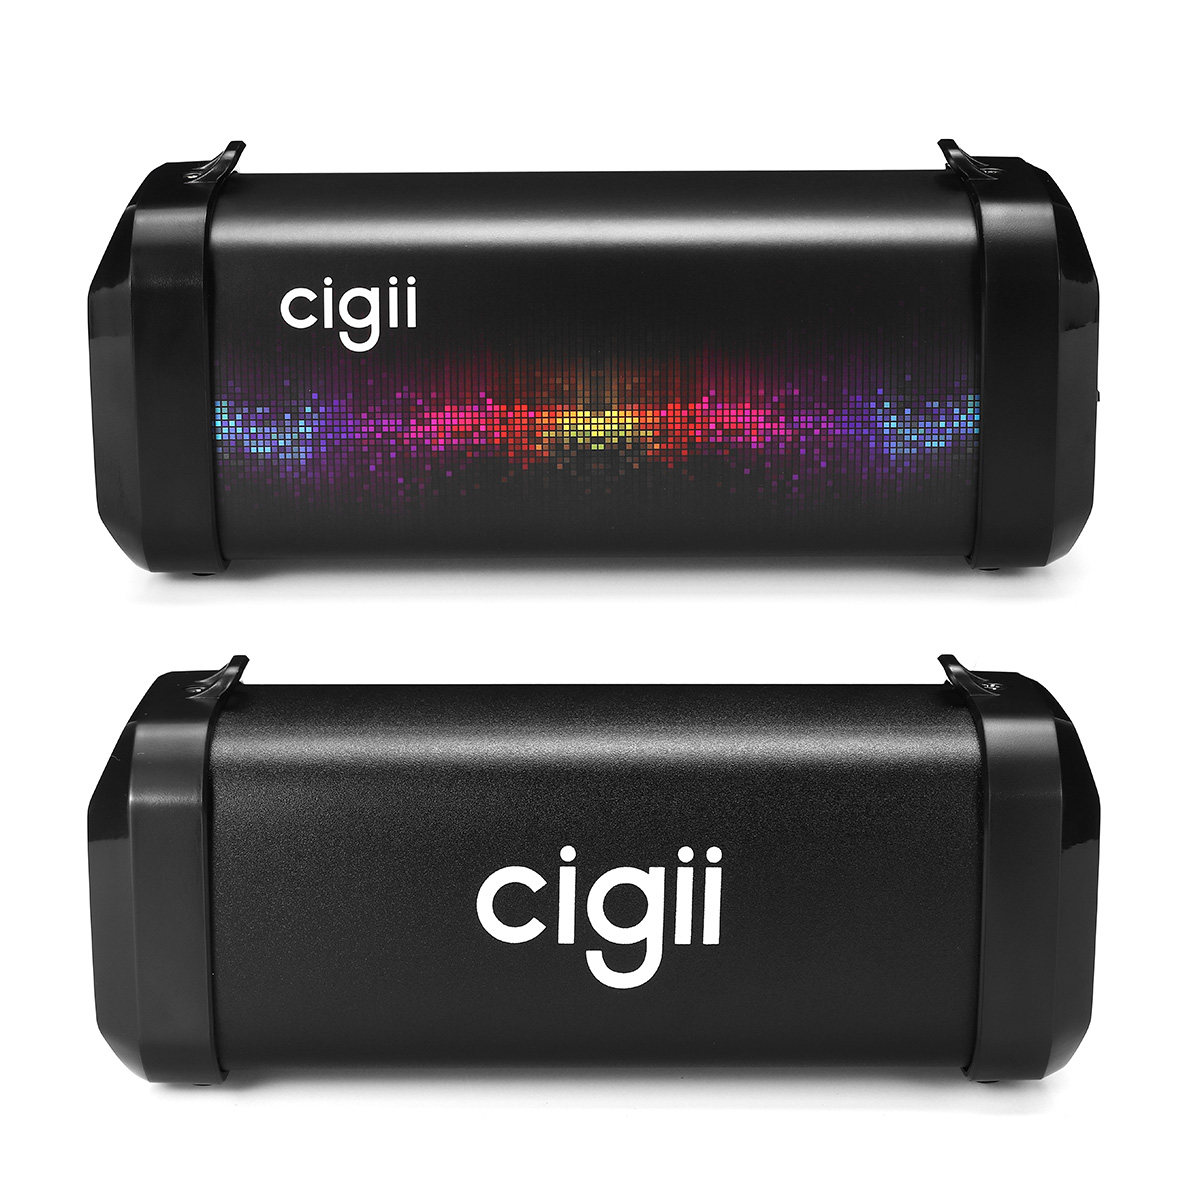 

Cigii DC 5V Portable Wireless bluetooth Speaker Stereo Bass Subwoofer Loudspeaker FM/AUX/USB/TF